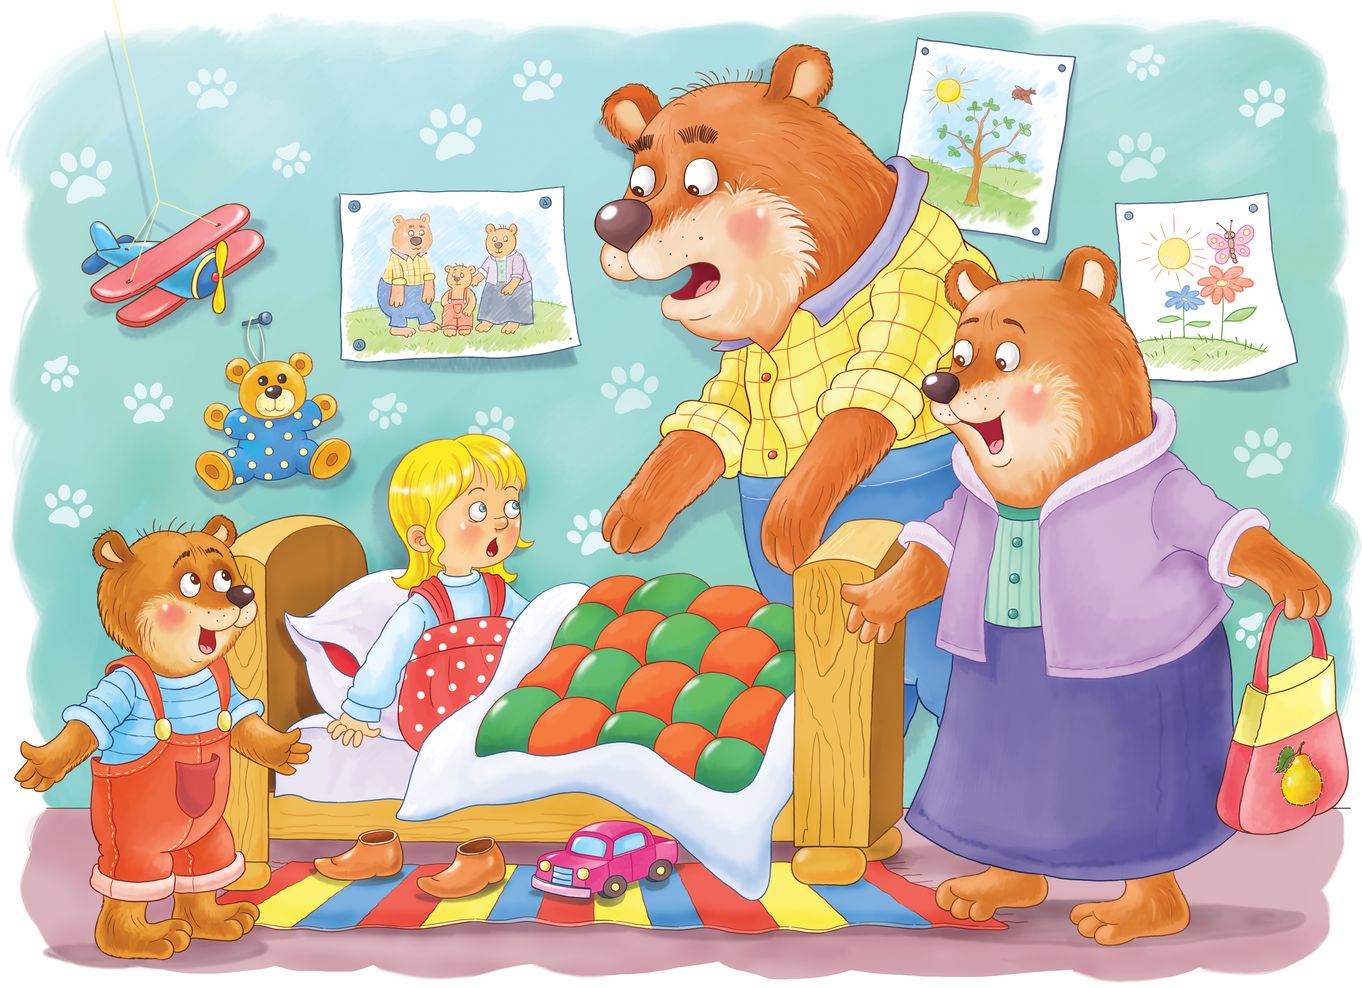 Cartoon image of the 3 bears finding goldilocks in bed